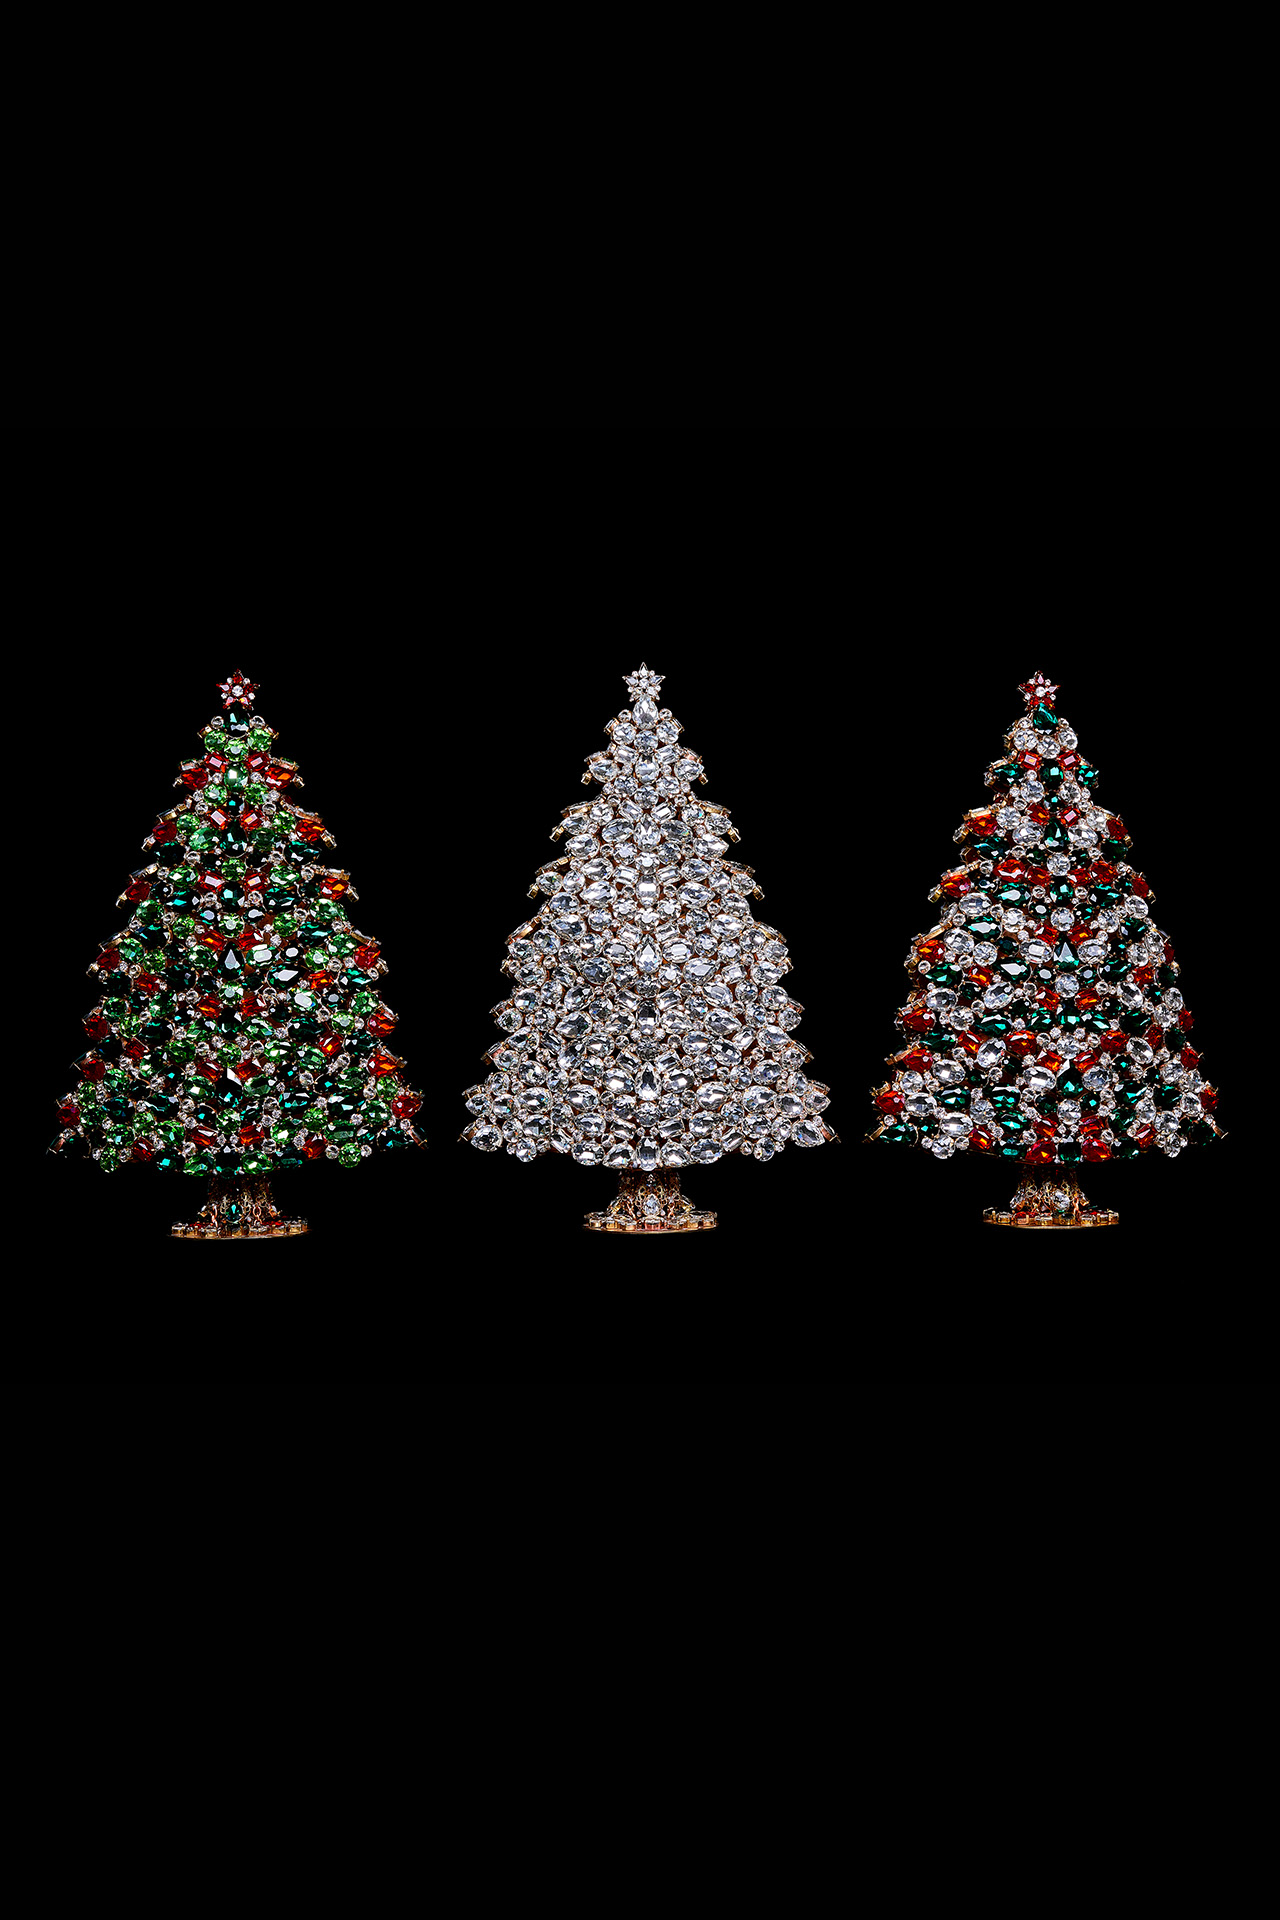 Handcrafted unique 3D design Christmas tree - festive color